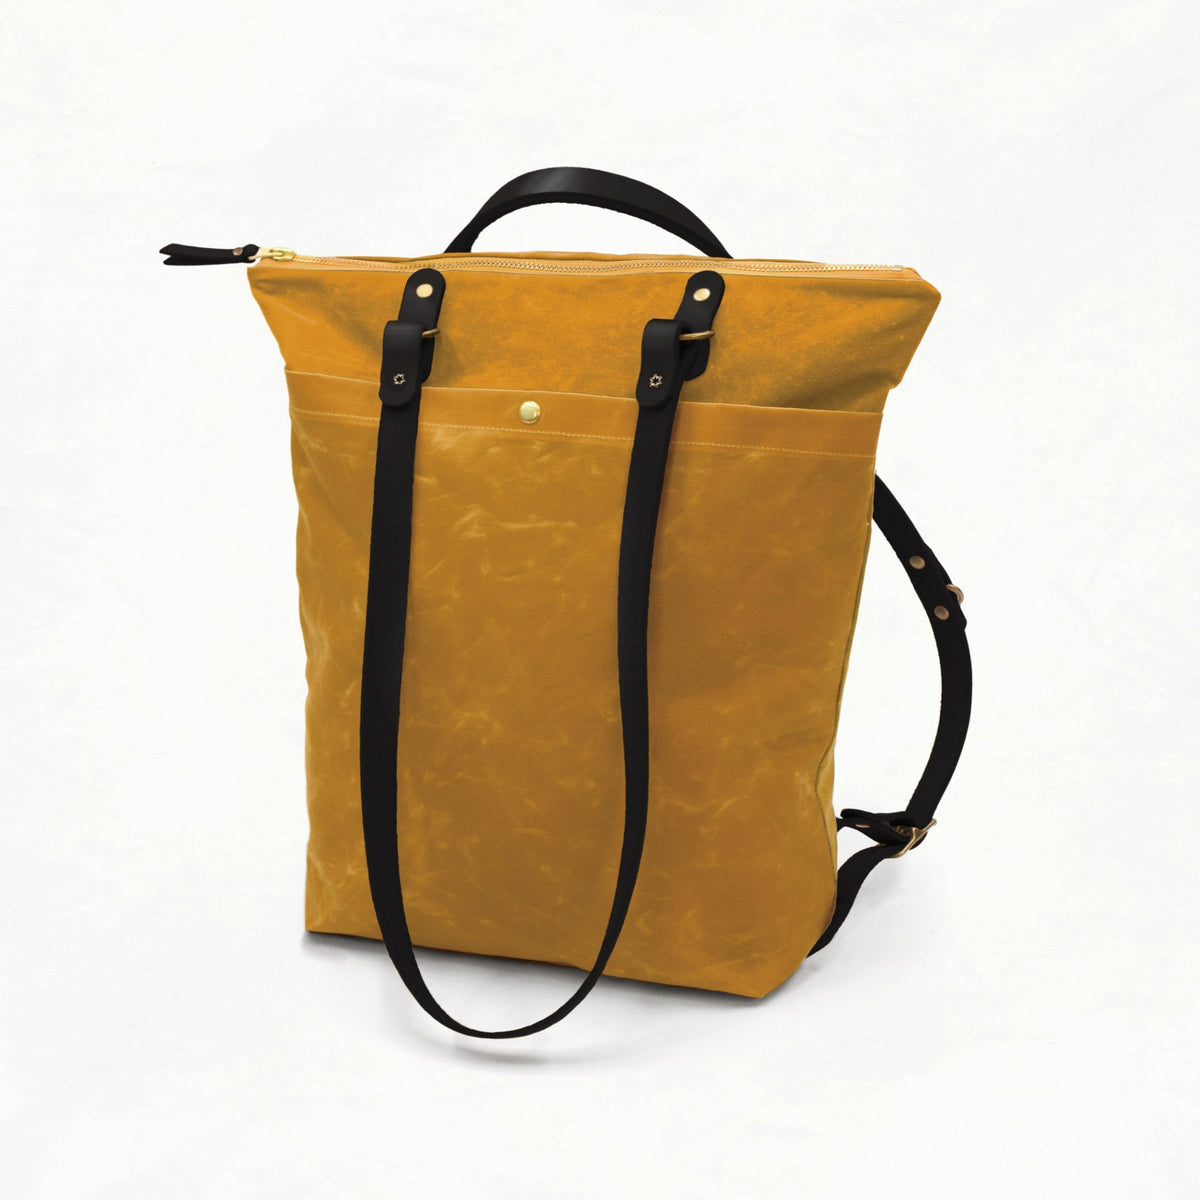 Maywood - Mustard Bag Maker Kit - MAY - MUS - MUS - BLA - BRA - MUS - Maker Kit - Klum House